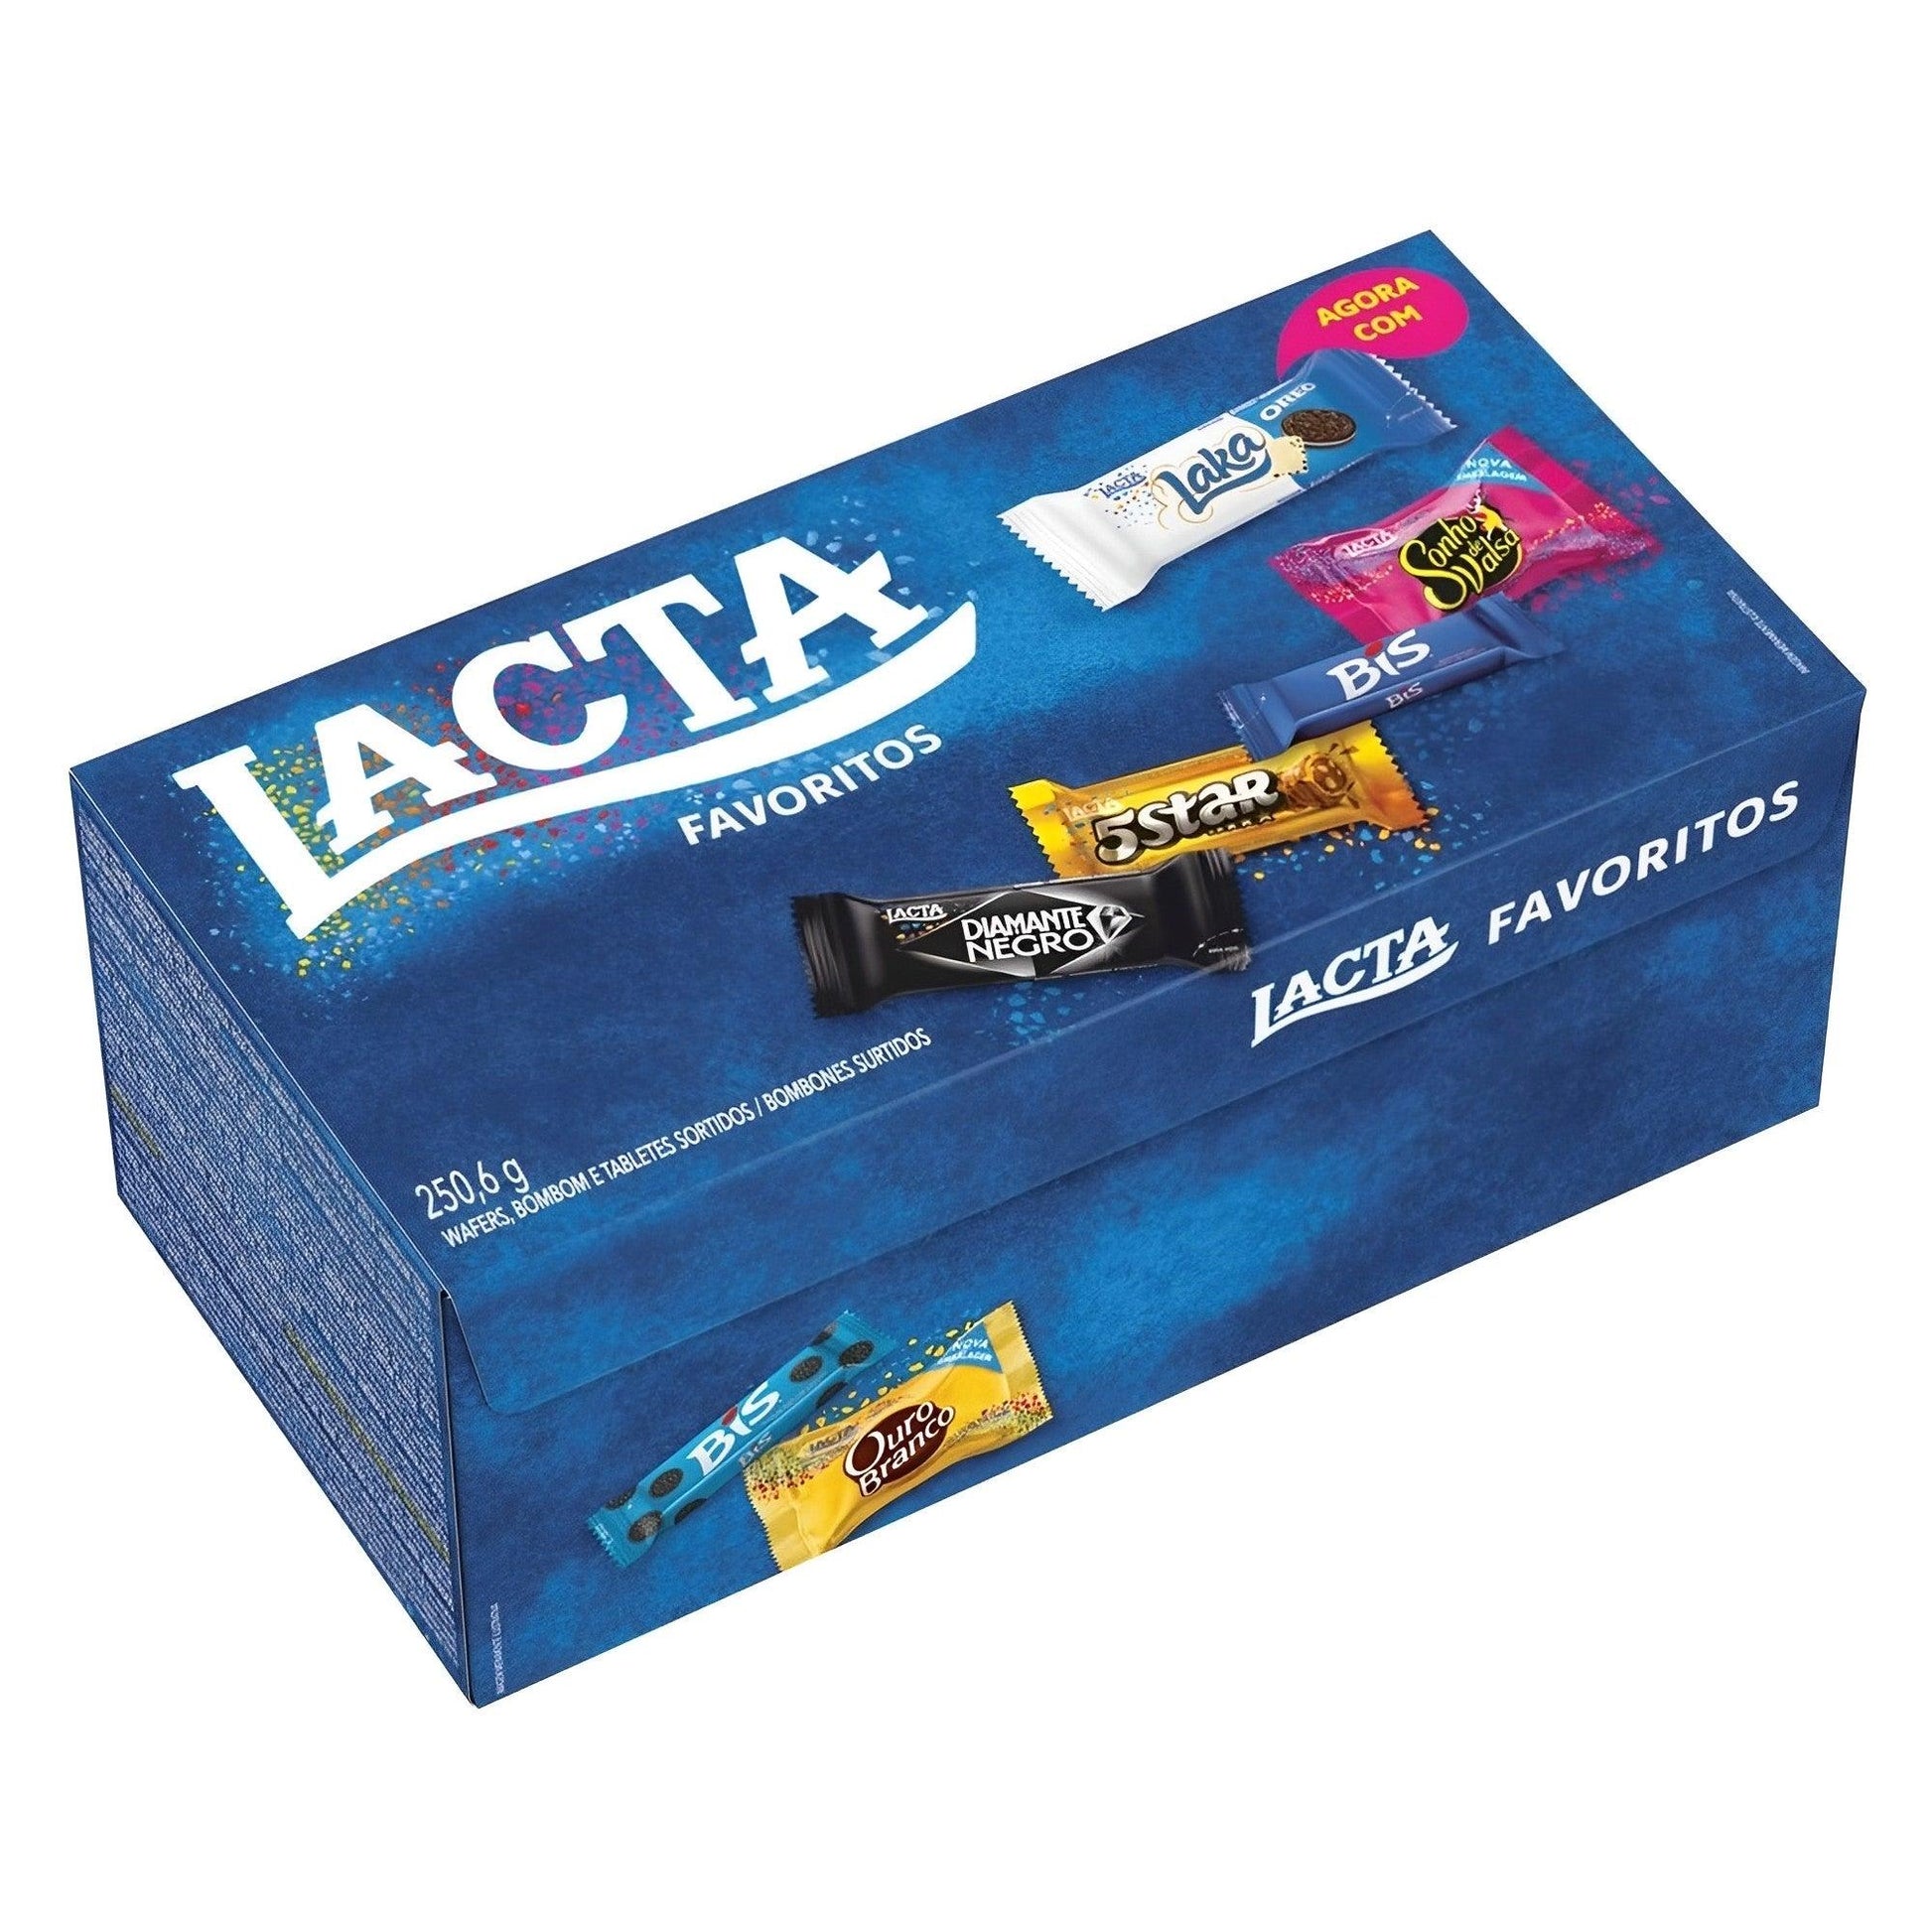 Lacta Favorites Assorted Bonbon Box 8.83 oz. (Pack of 3) - Brazilian Shop